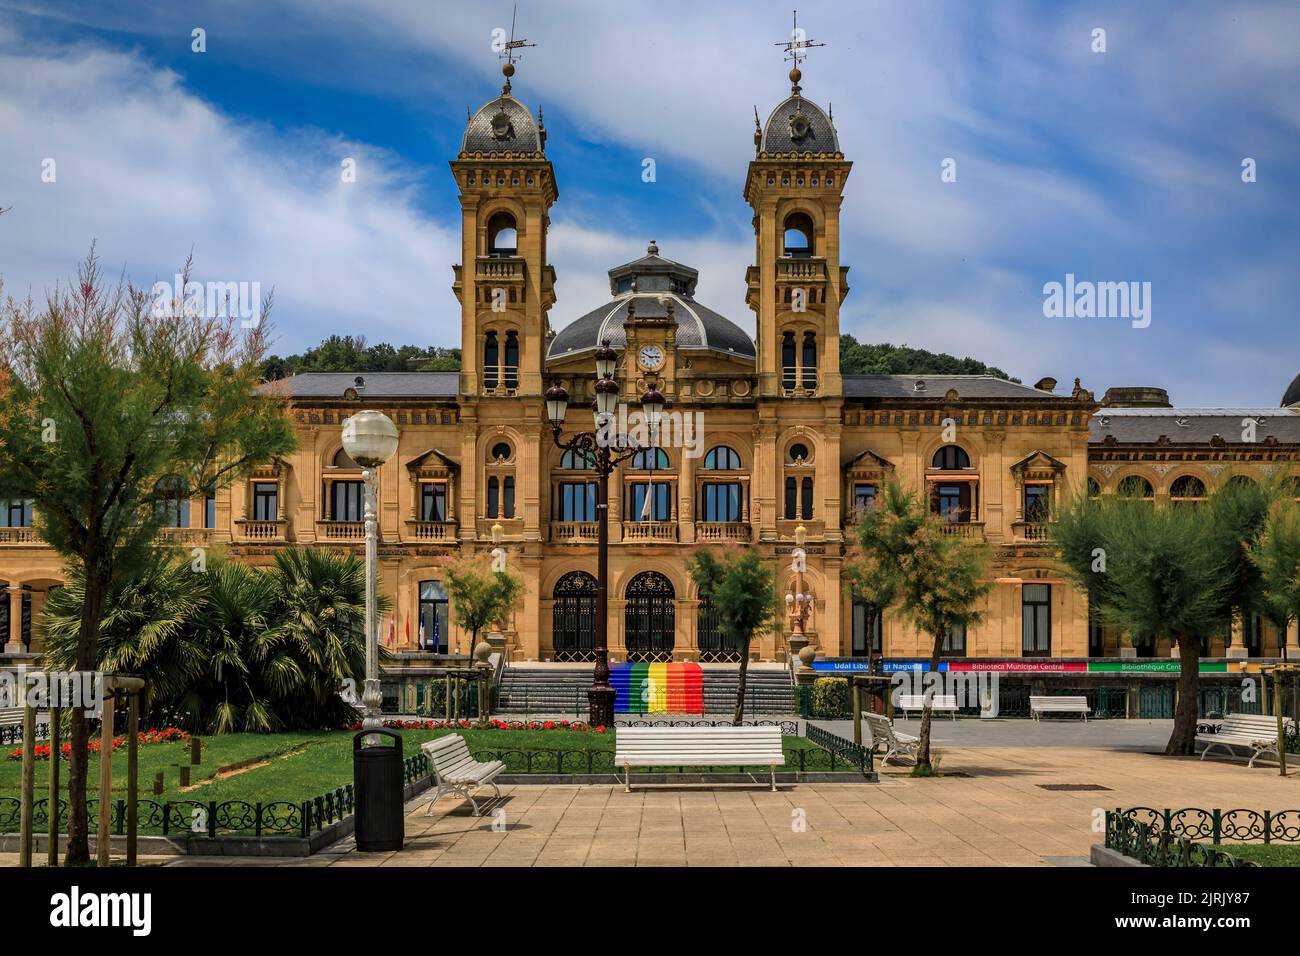 San Sebastian, Spain - June 26 2021: Ornate City Hall facade at the Alderdi Eder Gardens Park with a LGBT pride rainbow flag on the front steps Stock Photo